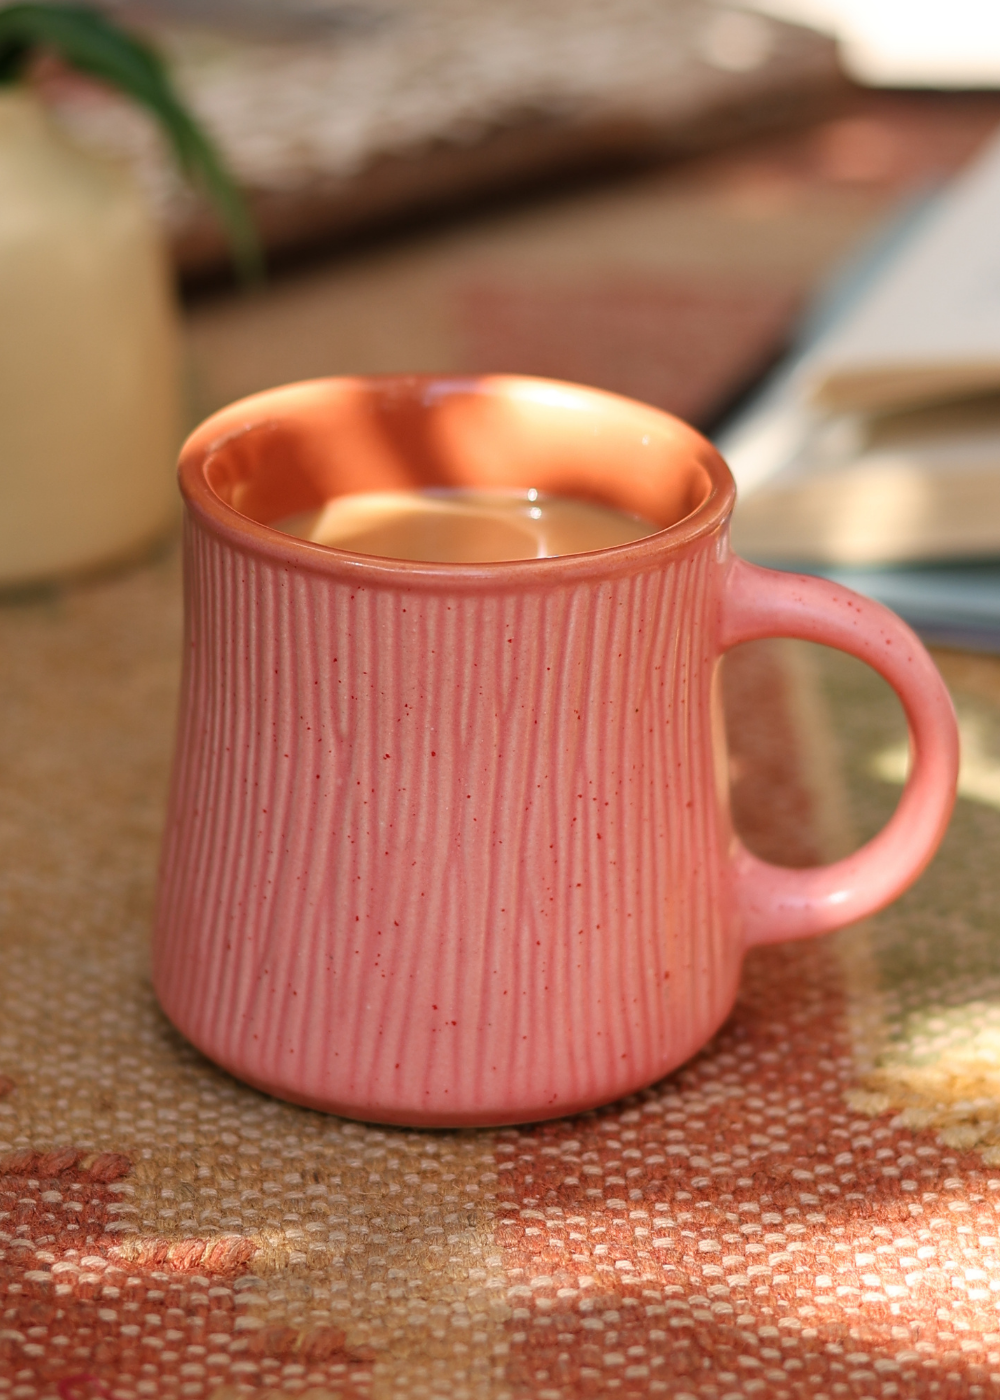 Ceramic chai cup with chai